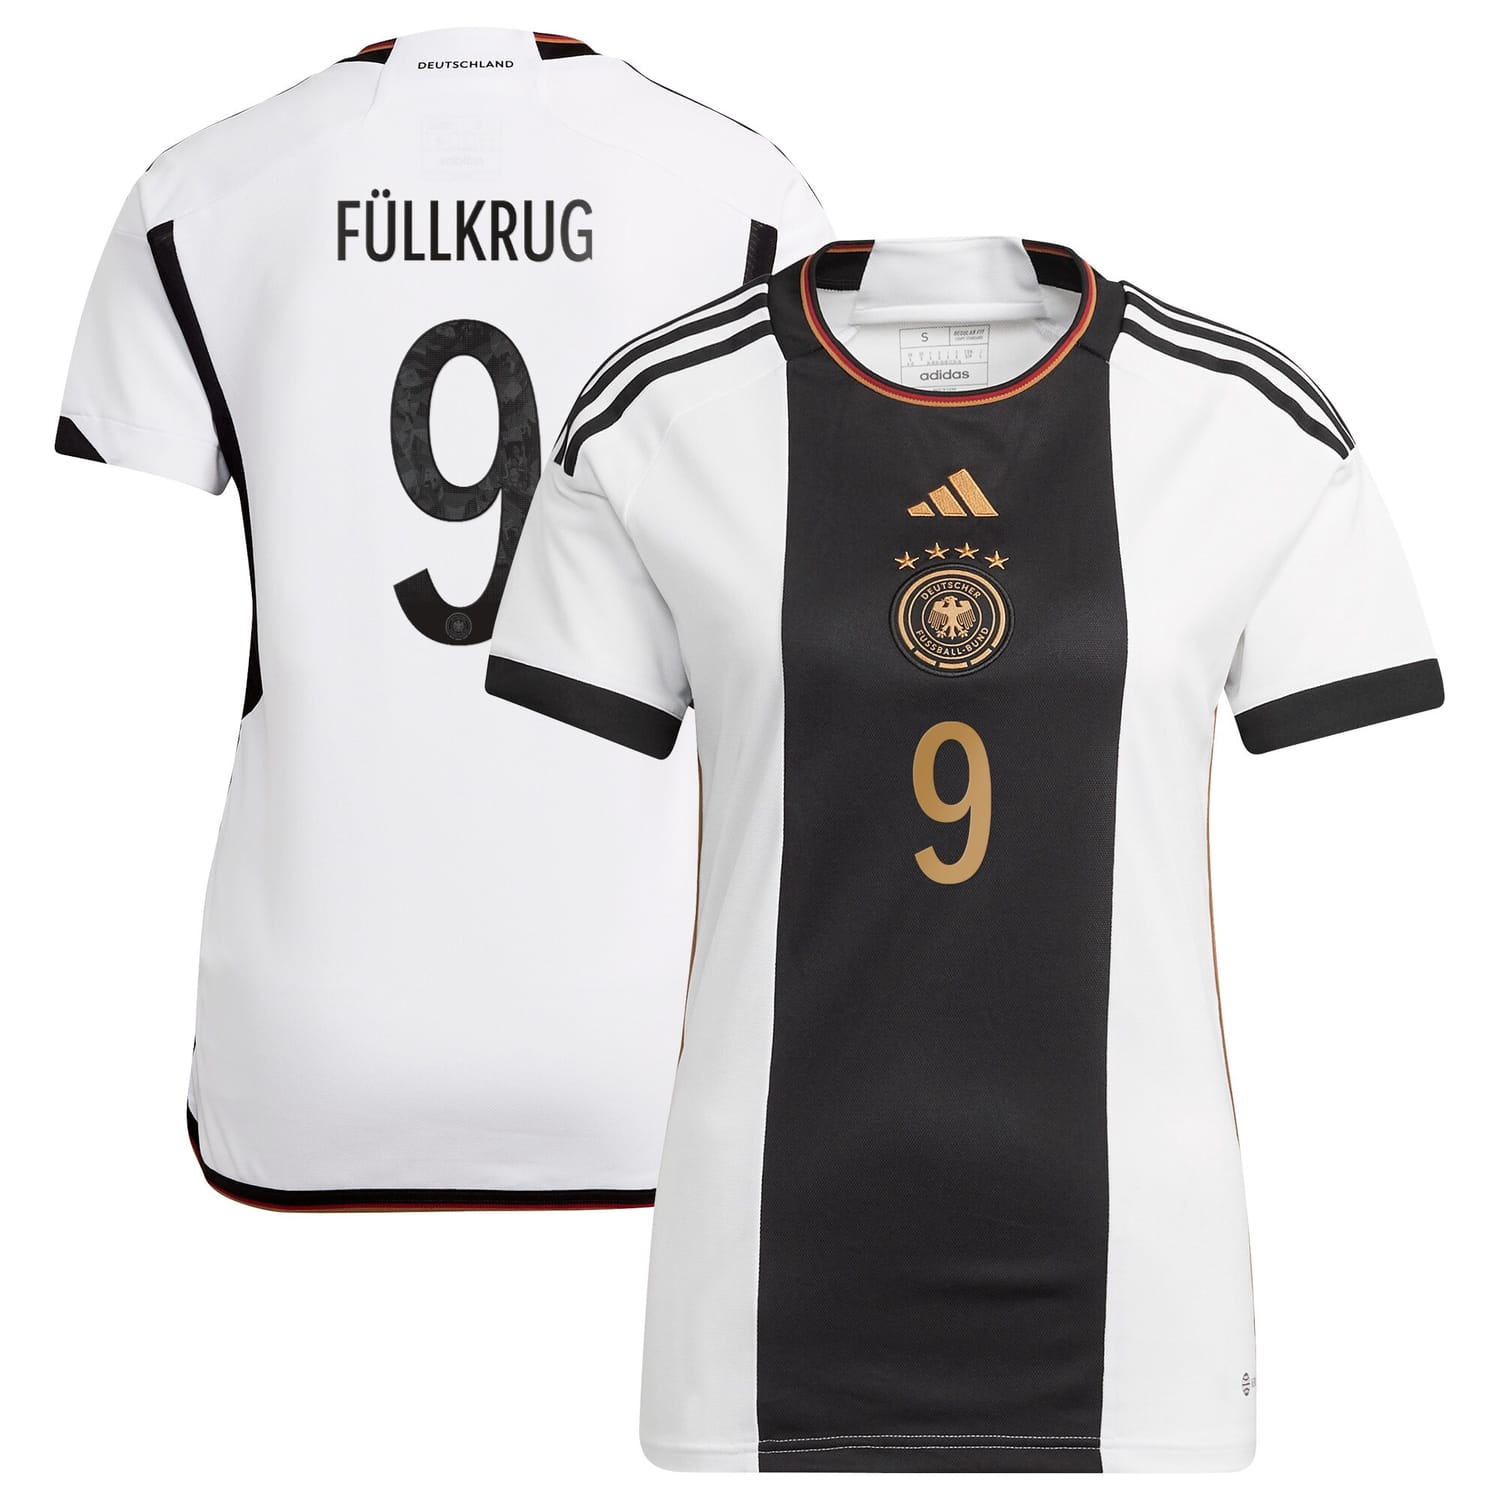 Germany National Team Home Jersey Shirt 2022 player Niclas Füllkrug 9 printing for Women